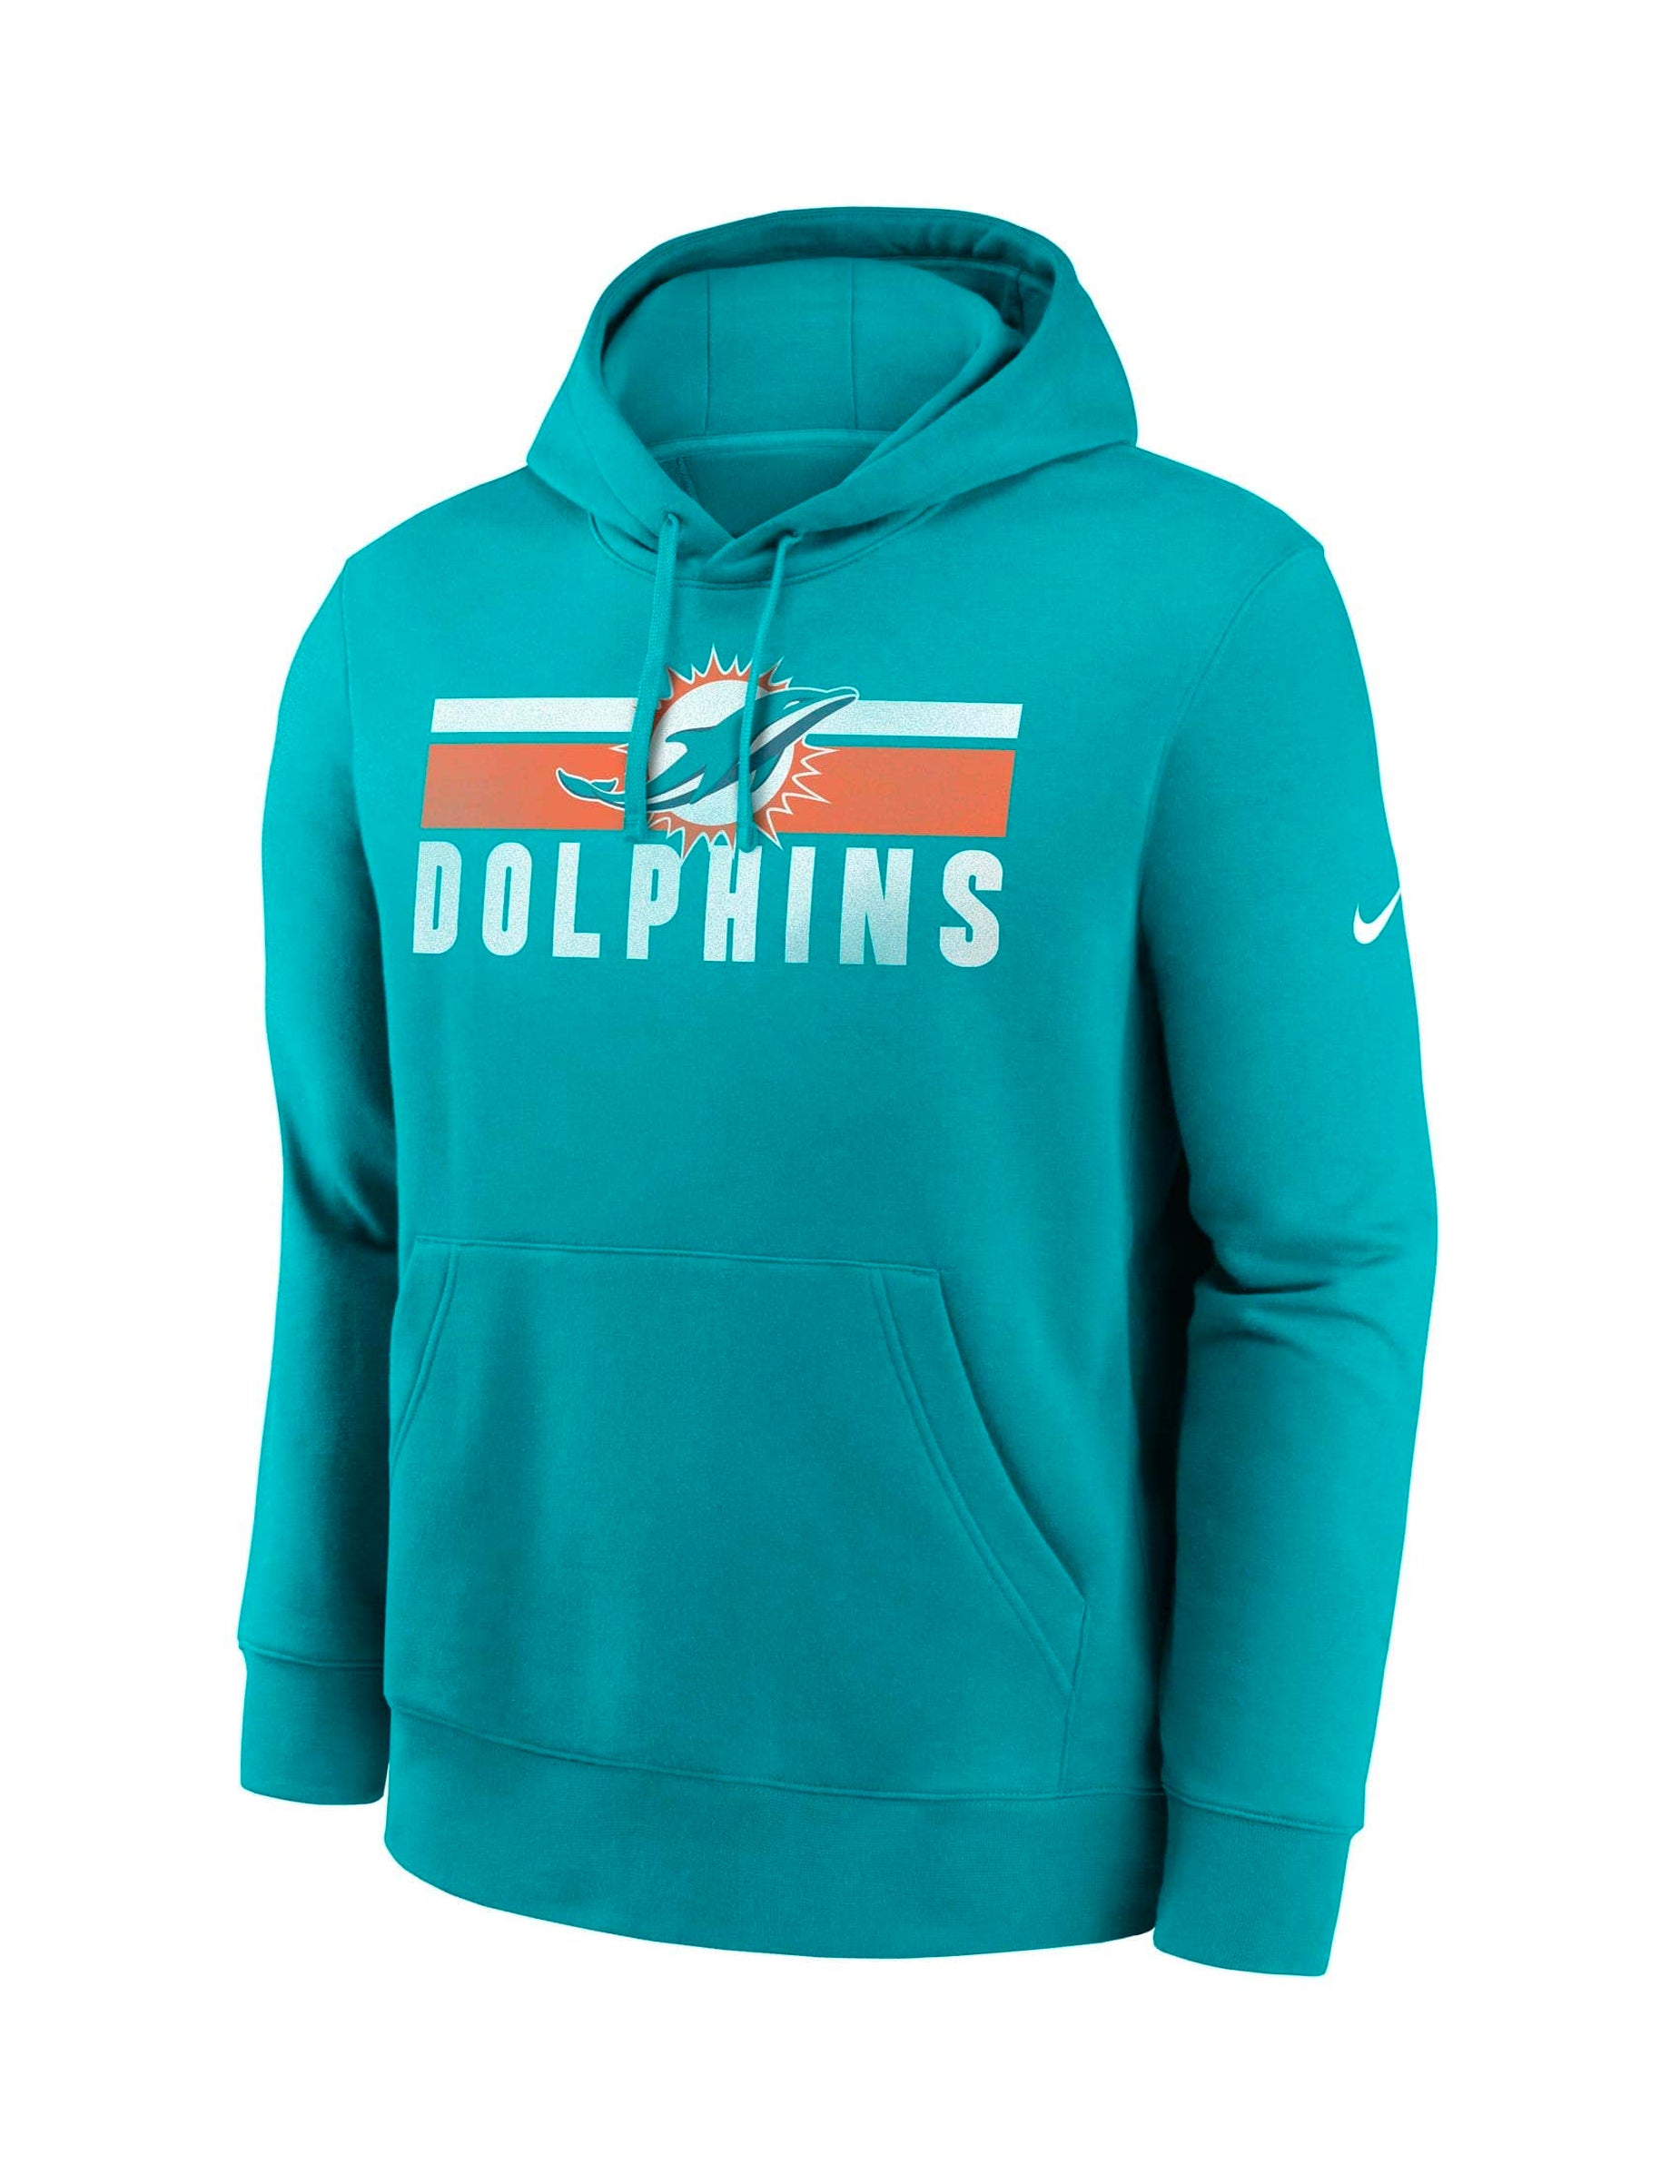 Miami Dolphins Nike NFL Team Stripes Hoodie Jumper - Aqua